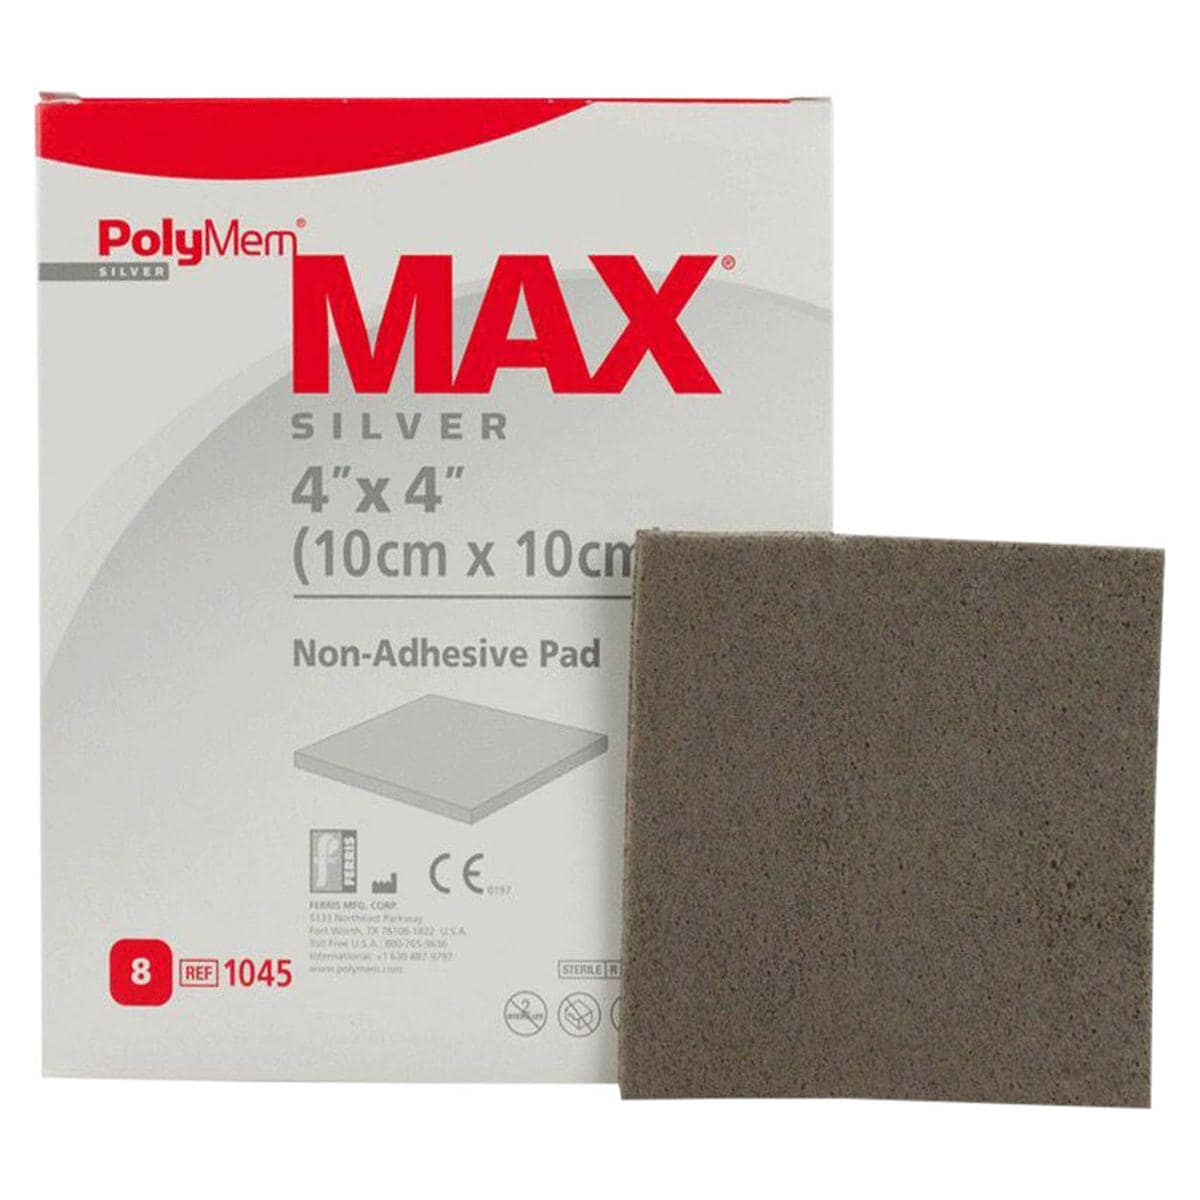 PolyMem Max zilver wondverband 10 x 10 cm - 10 x 10 cm, per 8 stuks